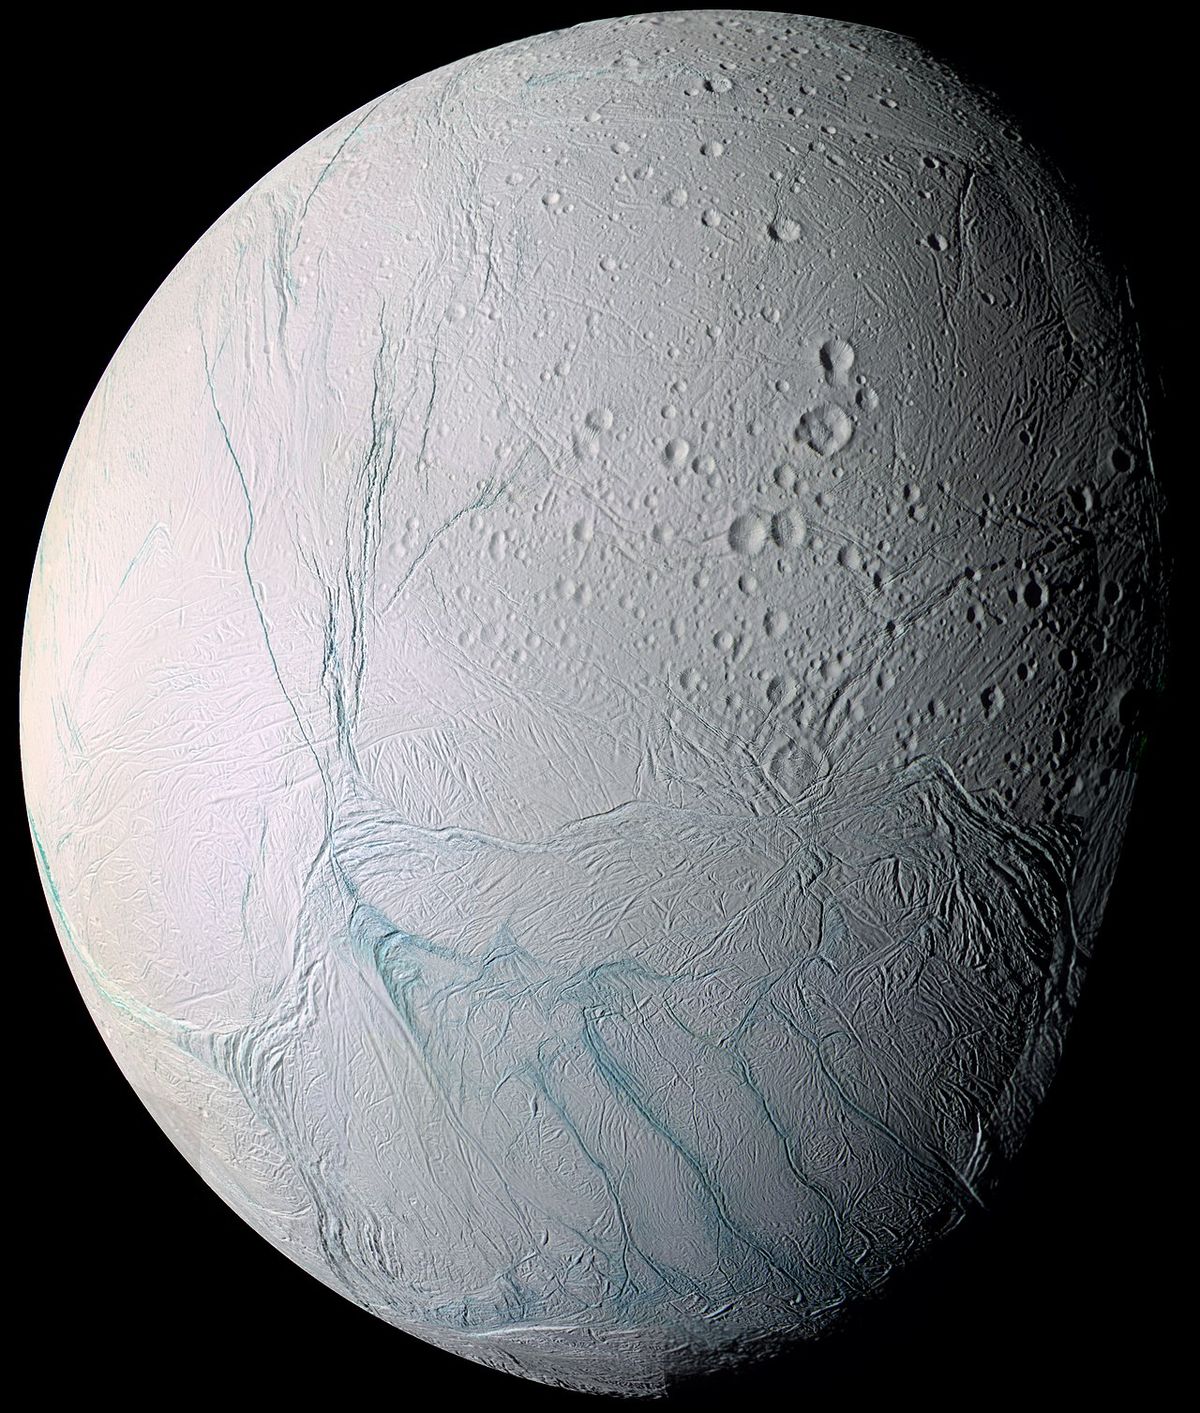 Sounds of Enceladus